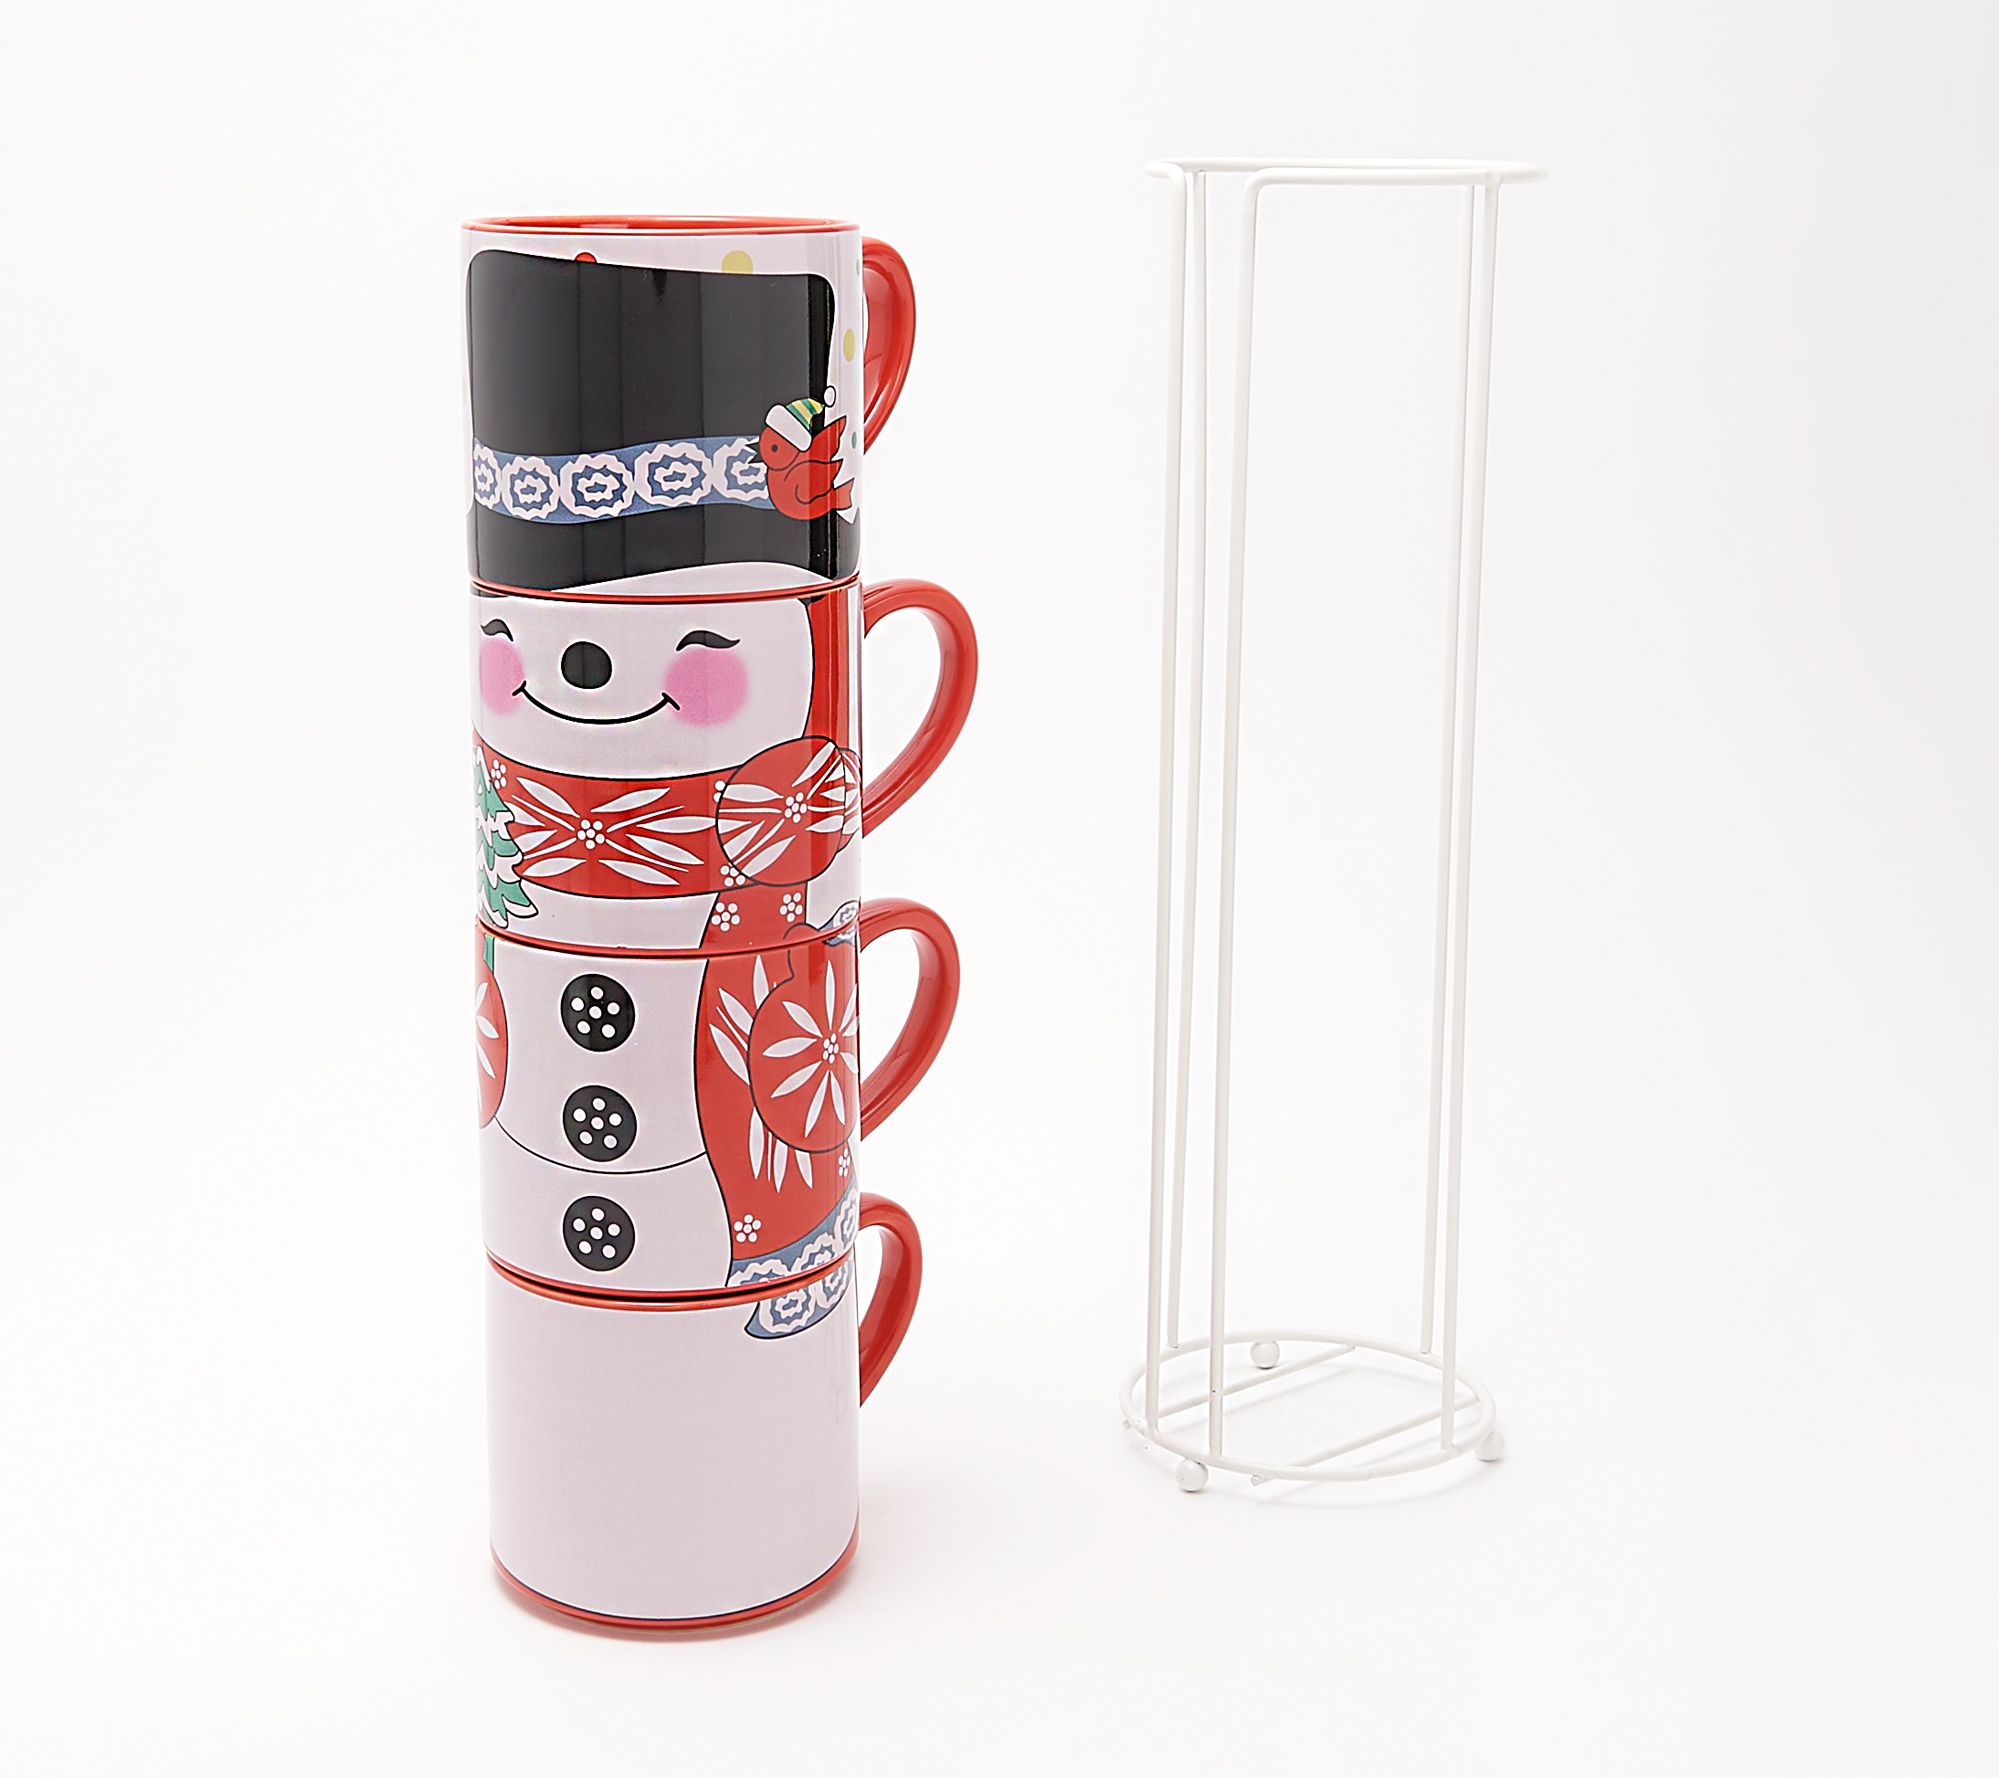 Mug and Tumbler Gift Set - We Don't Snow